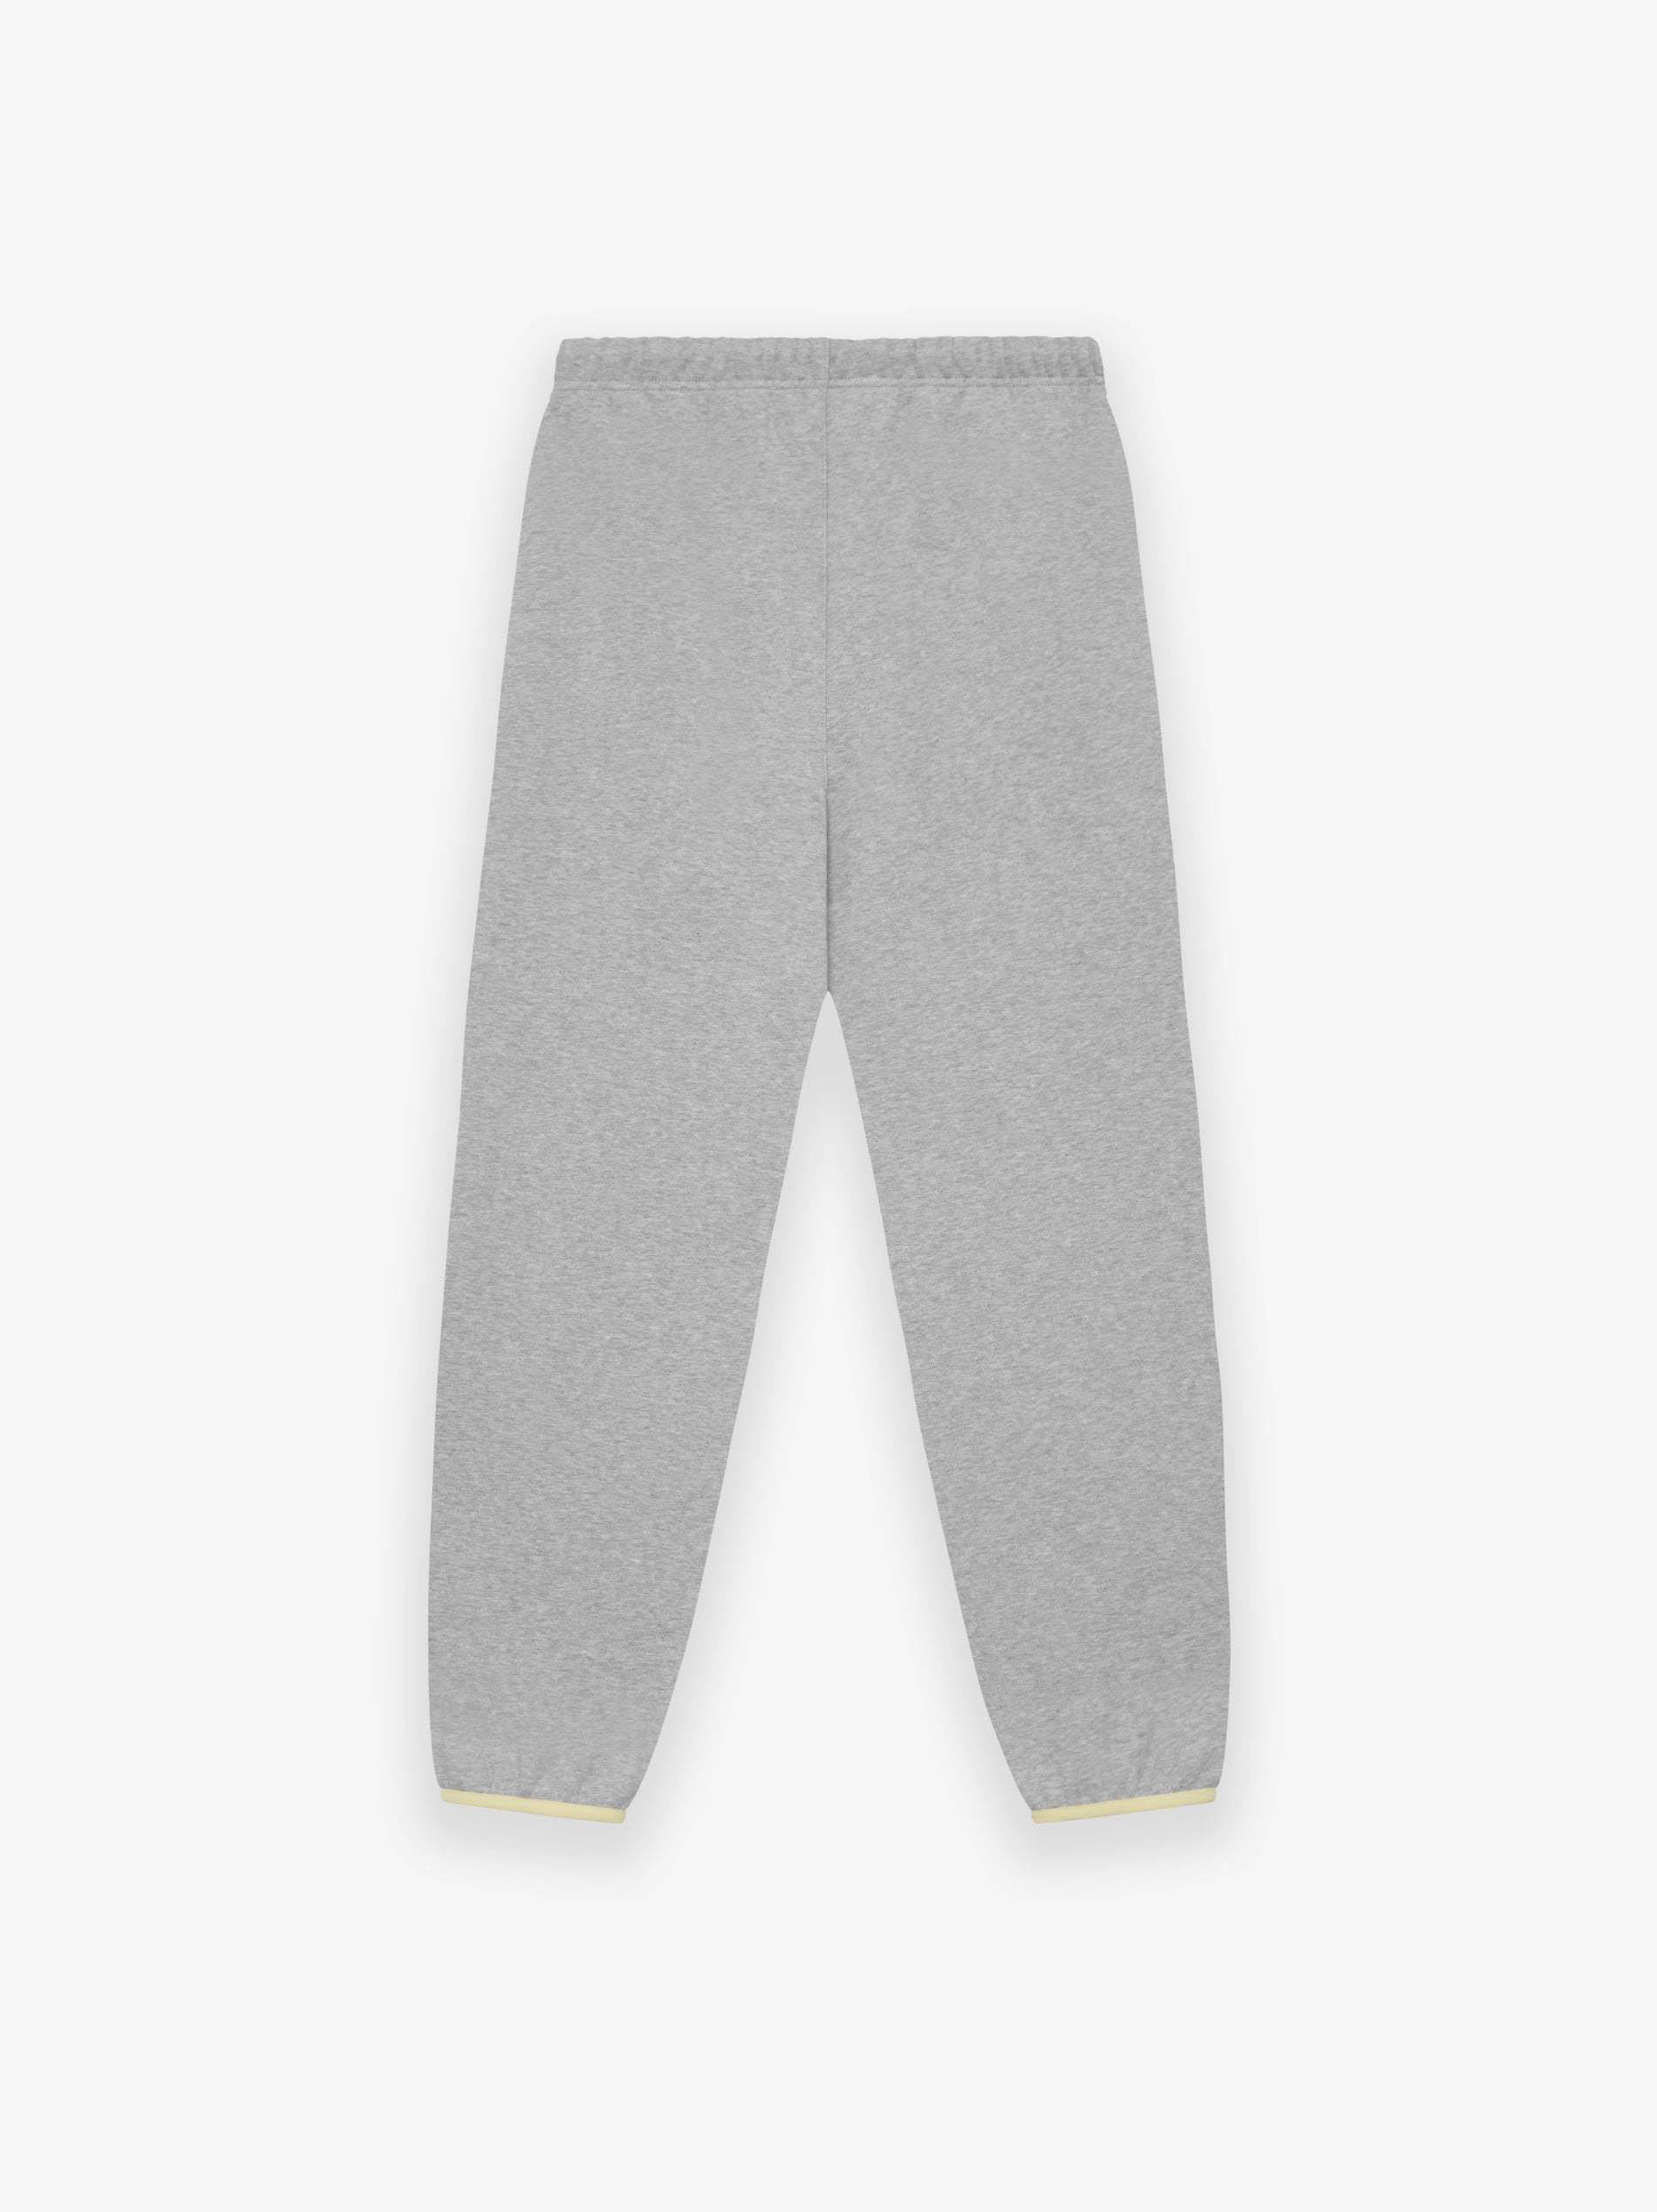 Fear of God ESSENTIALS: Gray Drawstring Sweatpants